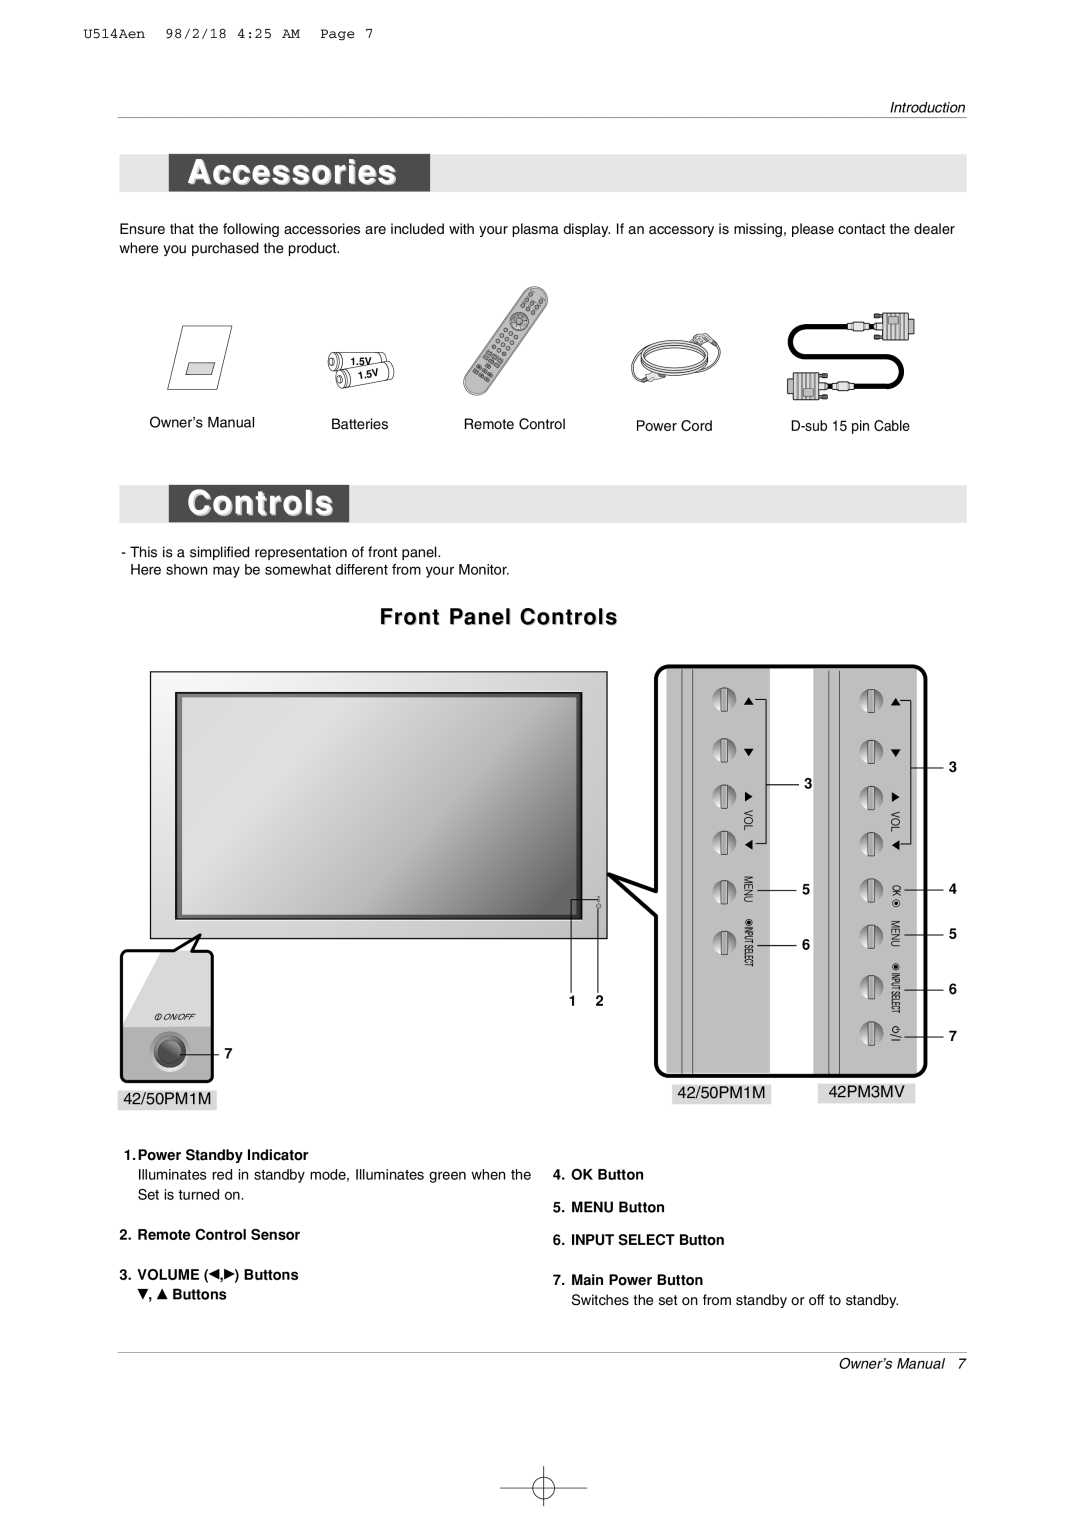 LG Electronics 42PM1M owner manual Accessories, Front Panel Controls, 42/50PM1M, 42PM3MV 